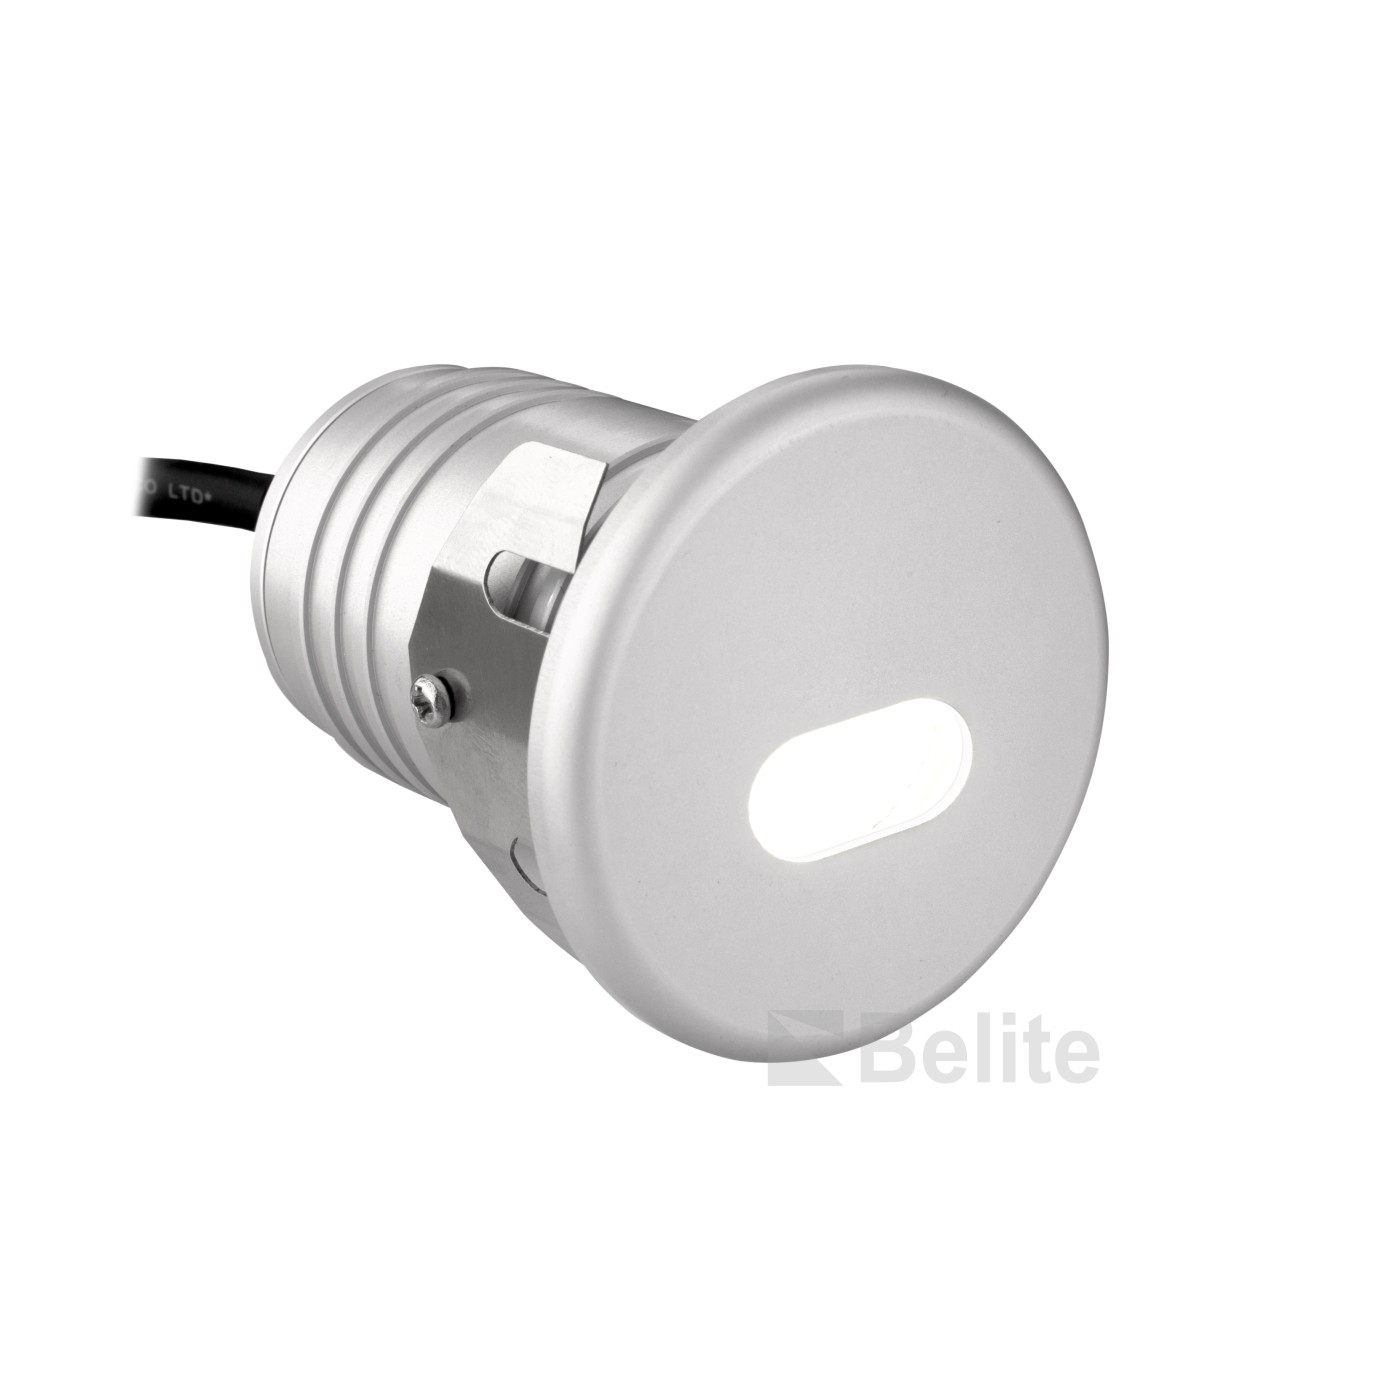 BELITE 5w IP67 outdoor led step light RGB DC24V COB LED